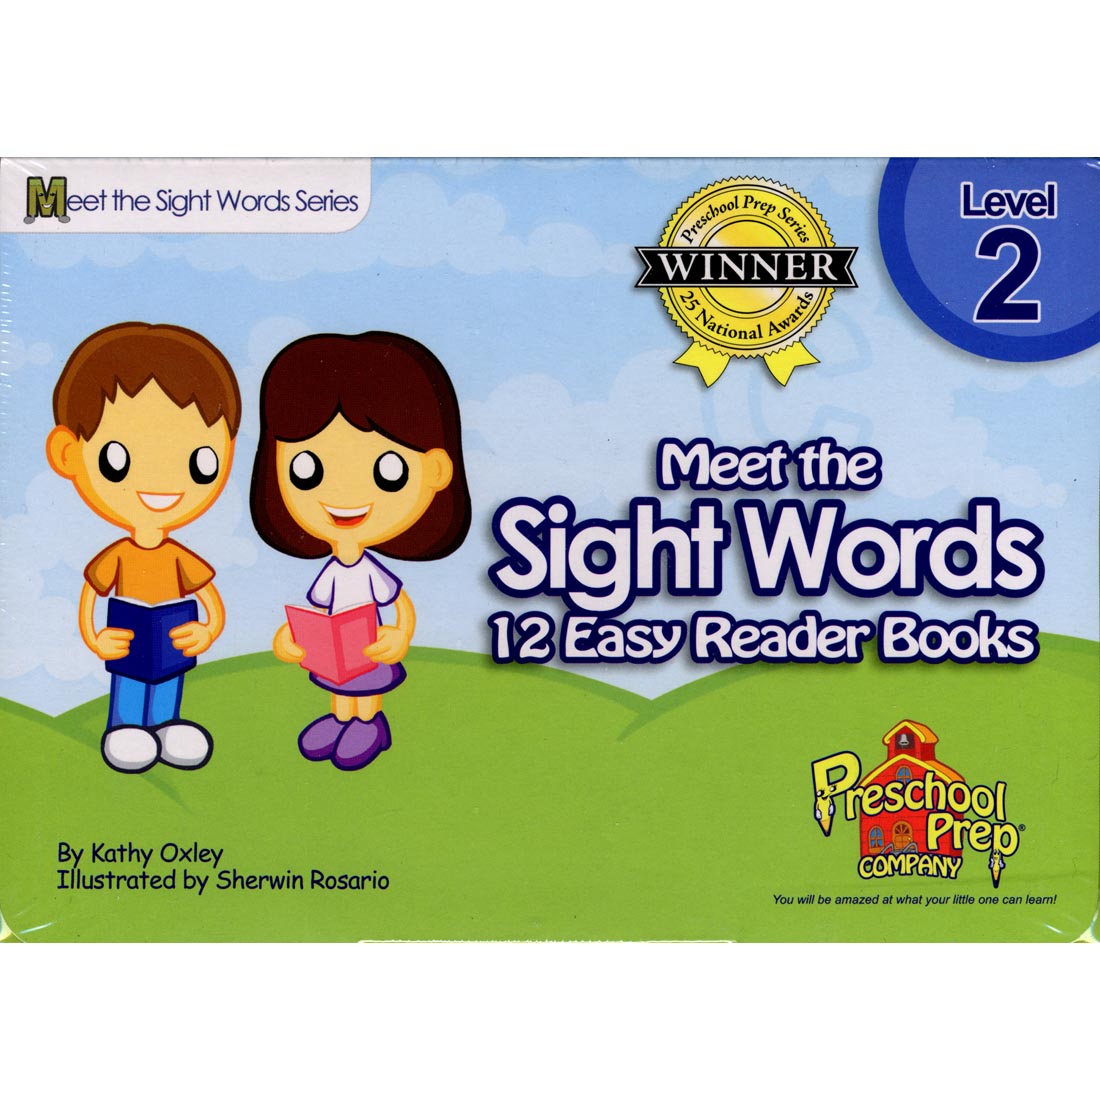 Preschool Prep Company Meet The Sight Words Easy Reader Books Level 2